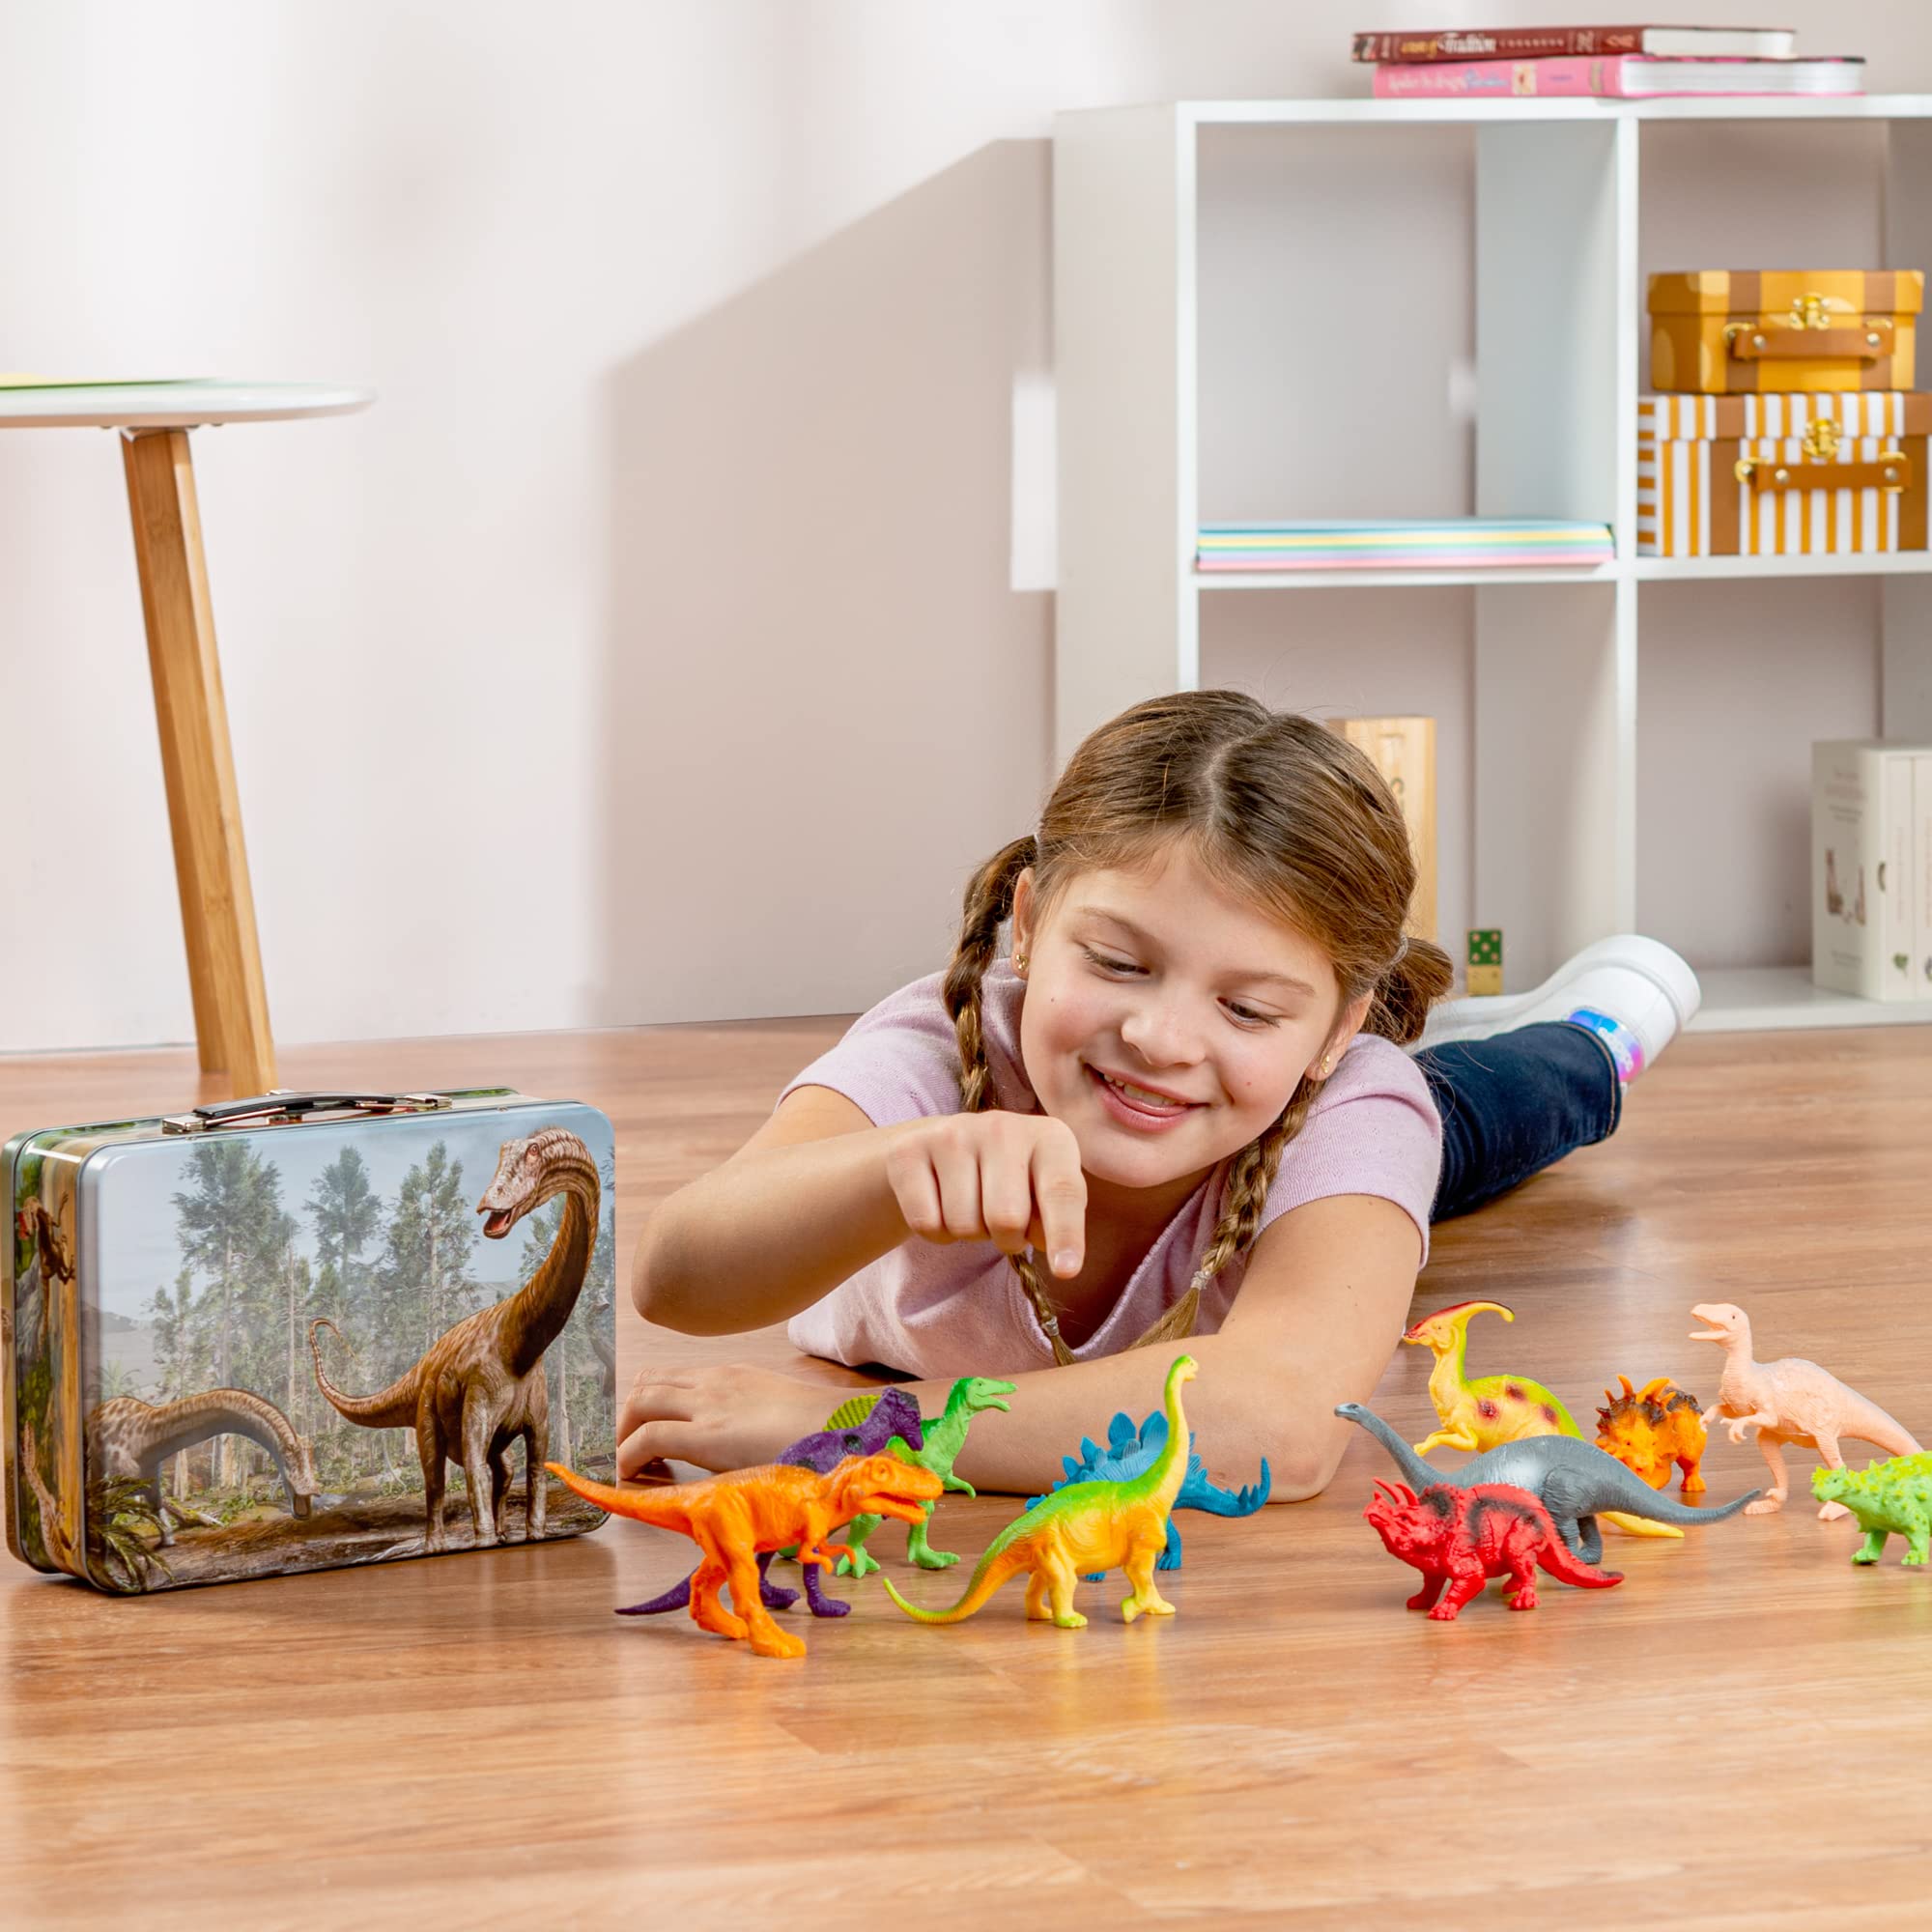 Dinosaur Toys for Kids Toys - 12 7-Inch Realistic Dinosaurs Figures with Storage Box | Kids Dinosaur Toys | Toddler Dinosaur Toy | Dinosaur Toys for Kids 3-5 5-7 | Dino Toys Kid Toys Toddler Boy Toys